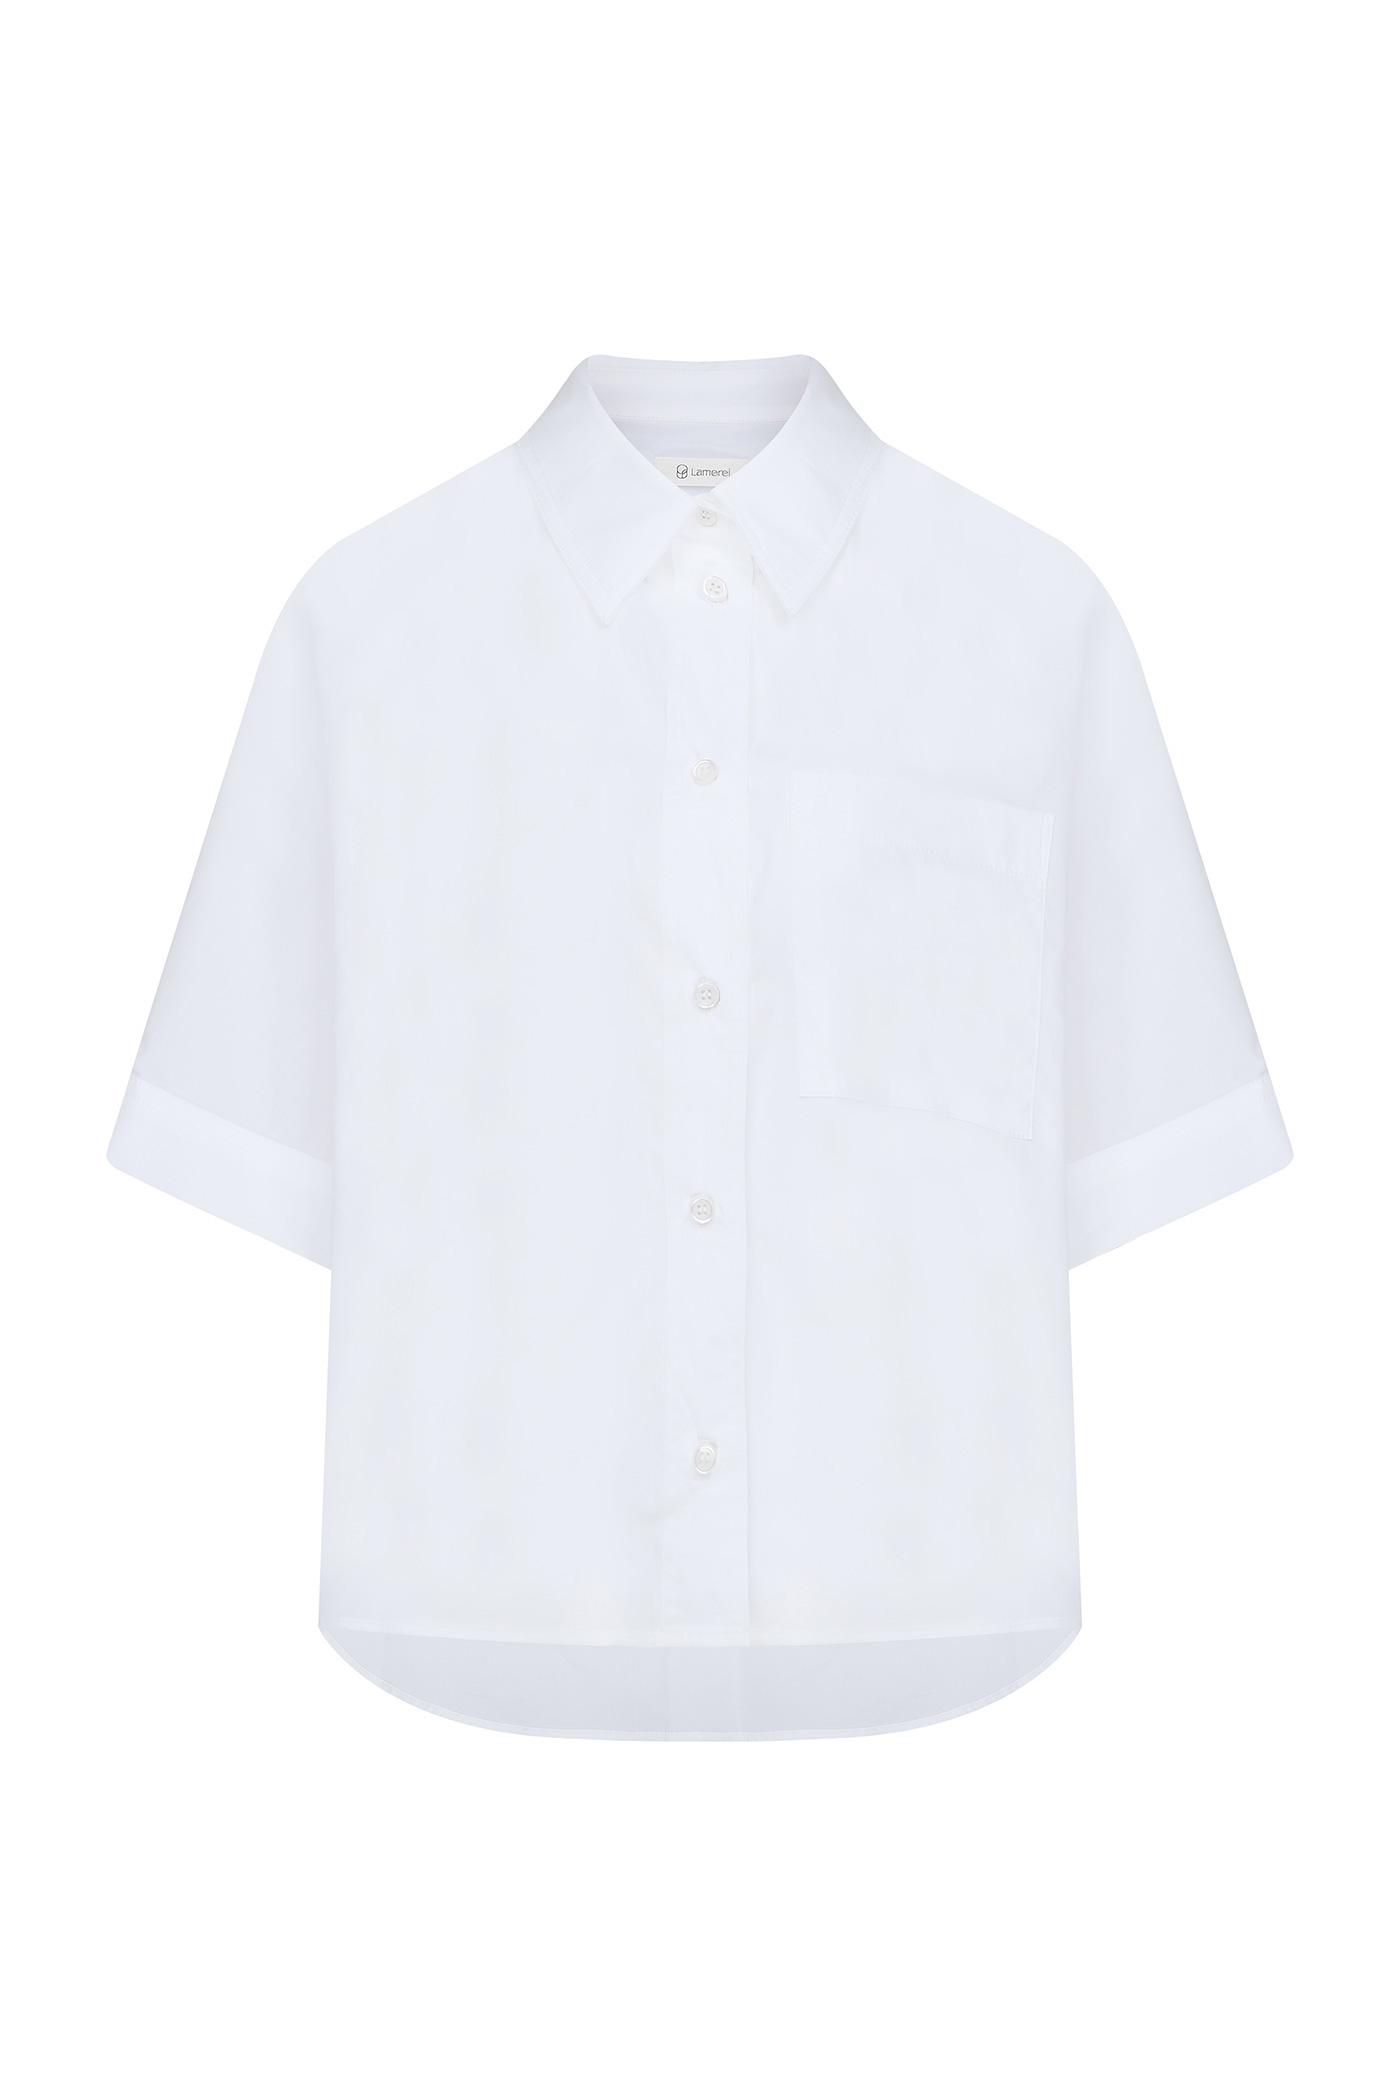 Cotton Placket Shirt-White